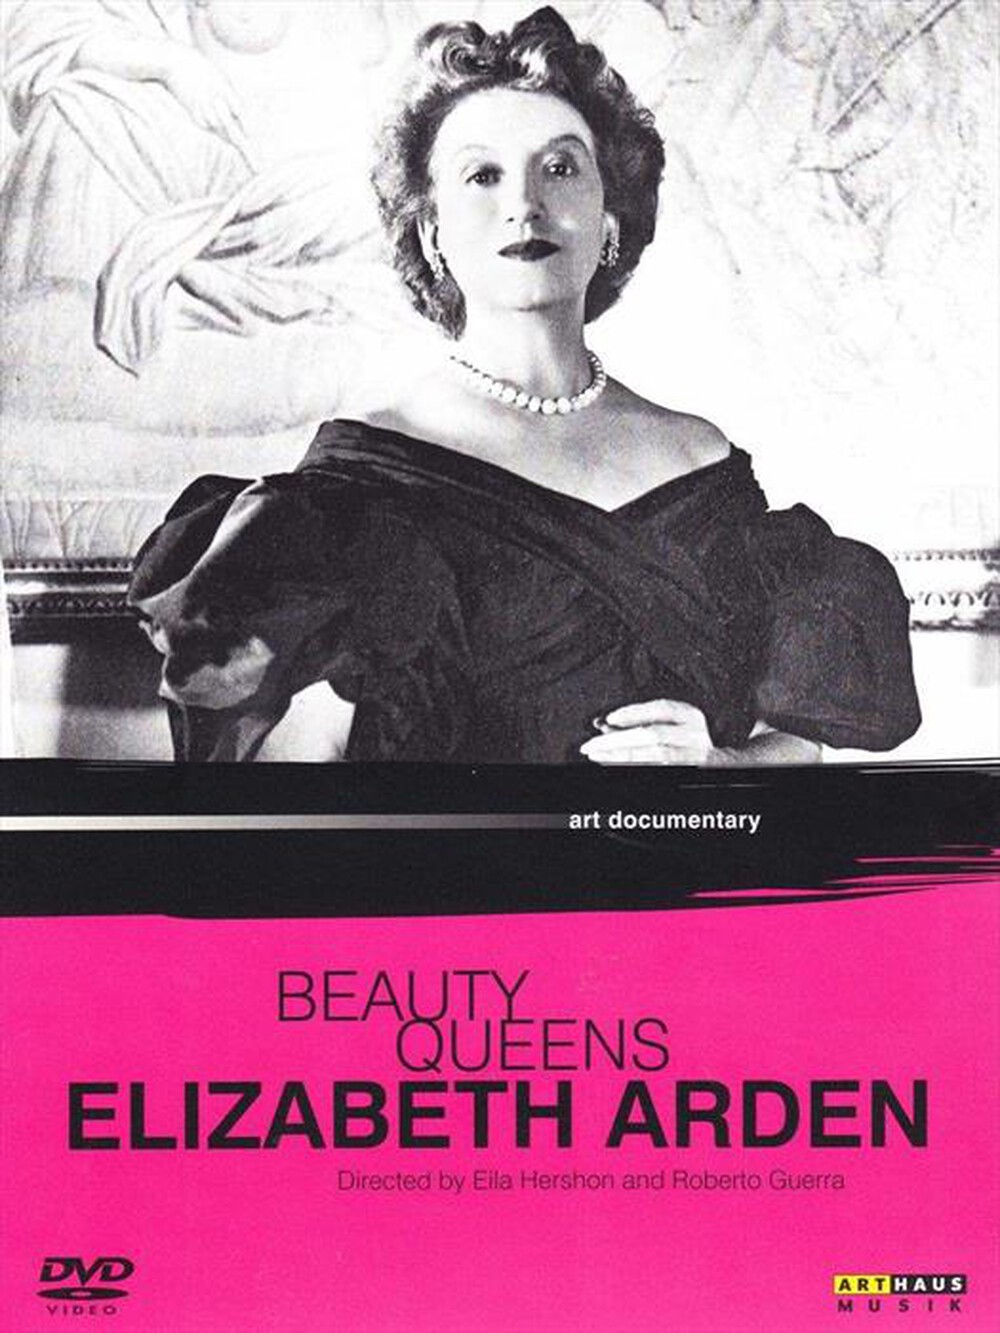 "Arthaus Musik - Beauty Queens - Elizabeth Arden"